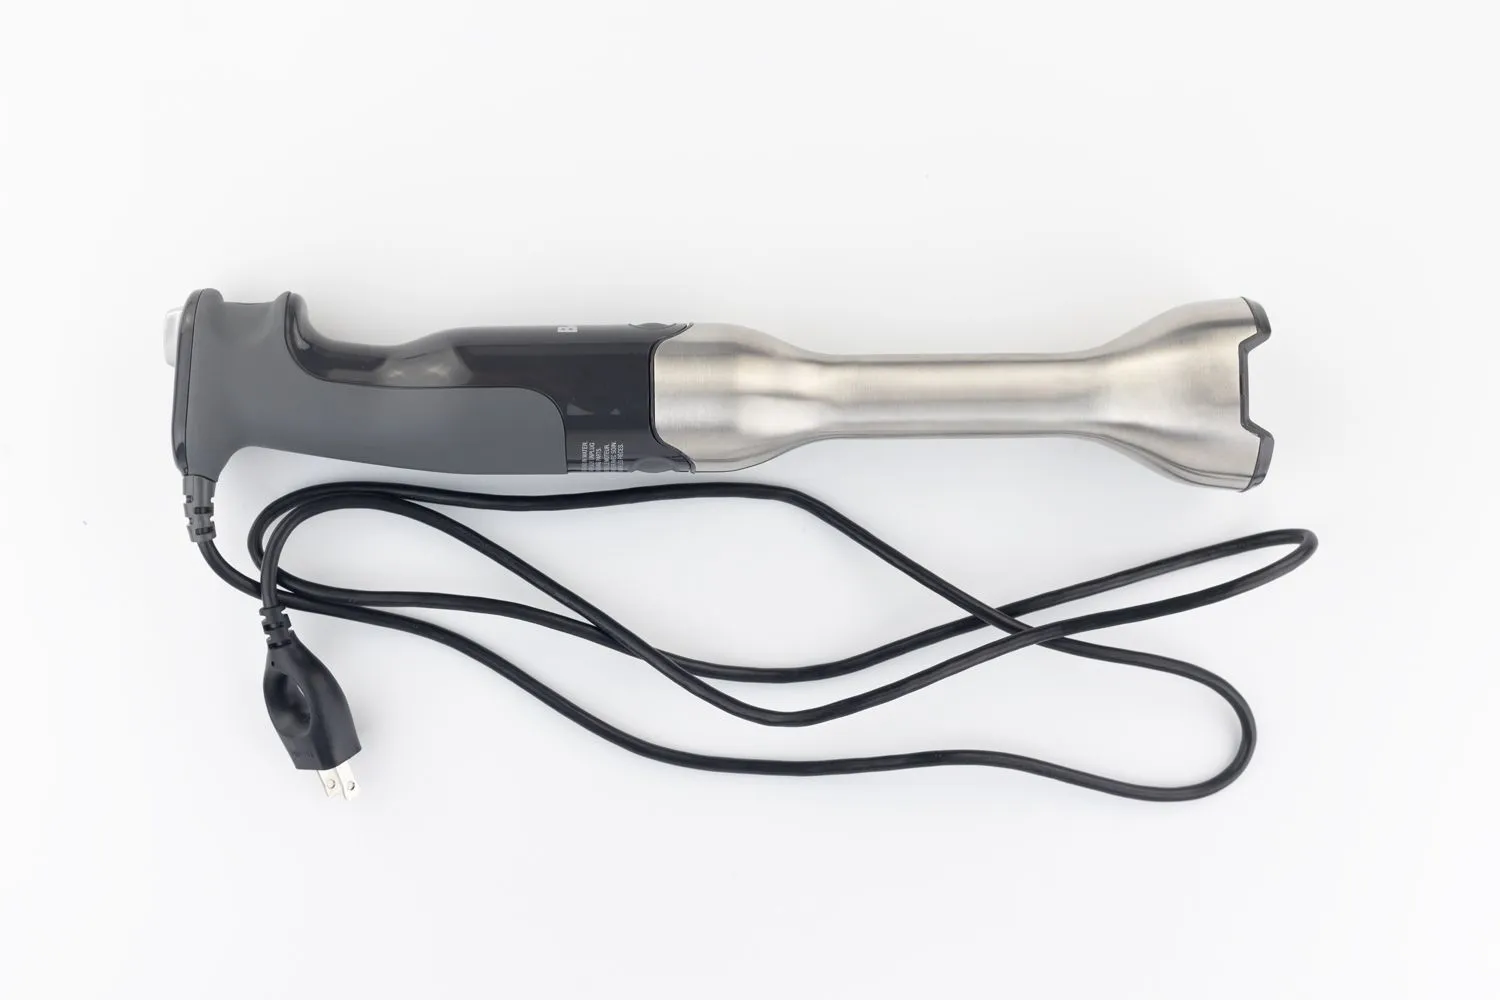 Breville Control Grip Immersion Blender: Convenient and Quick